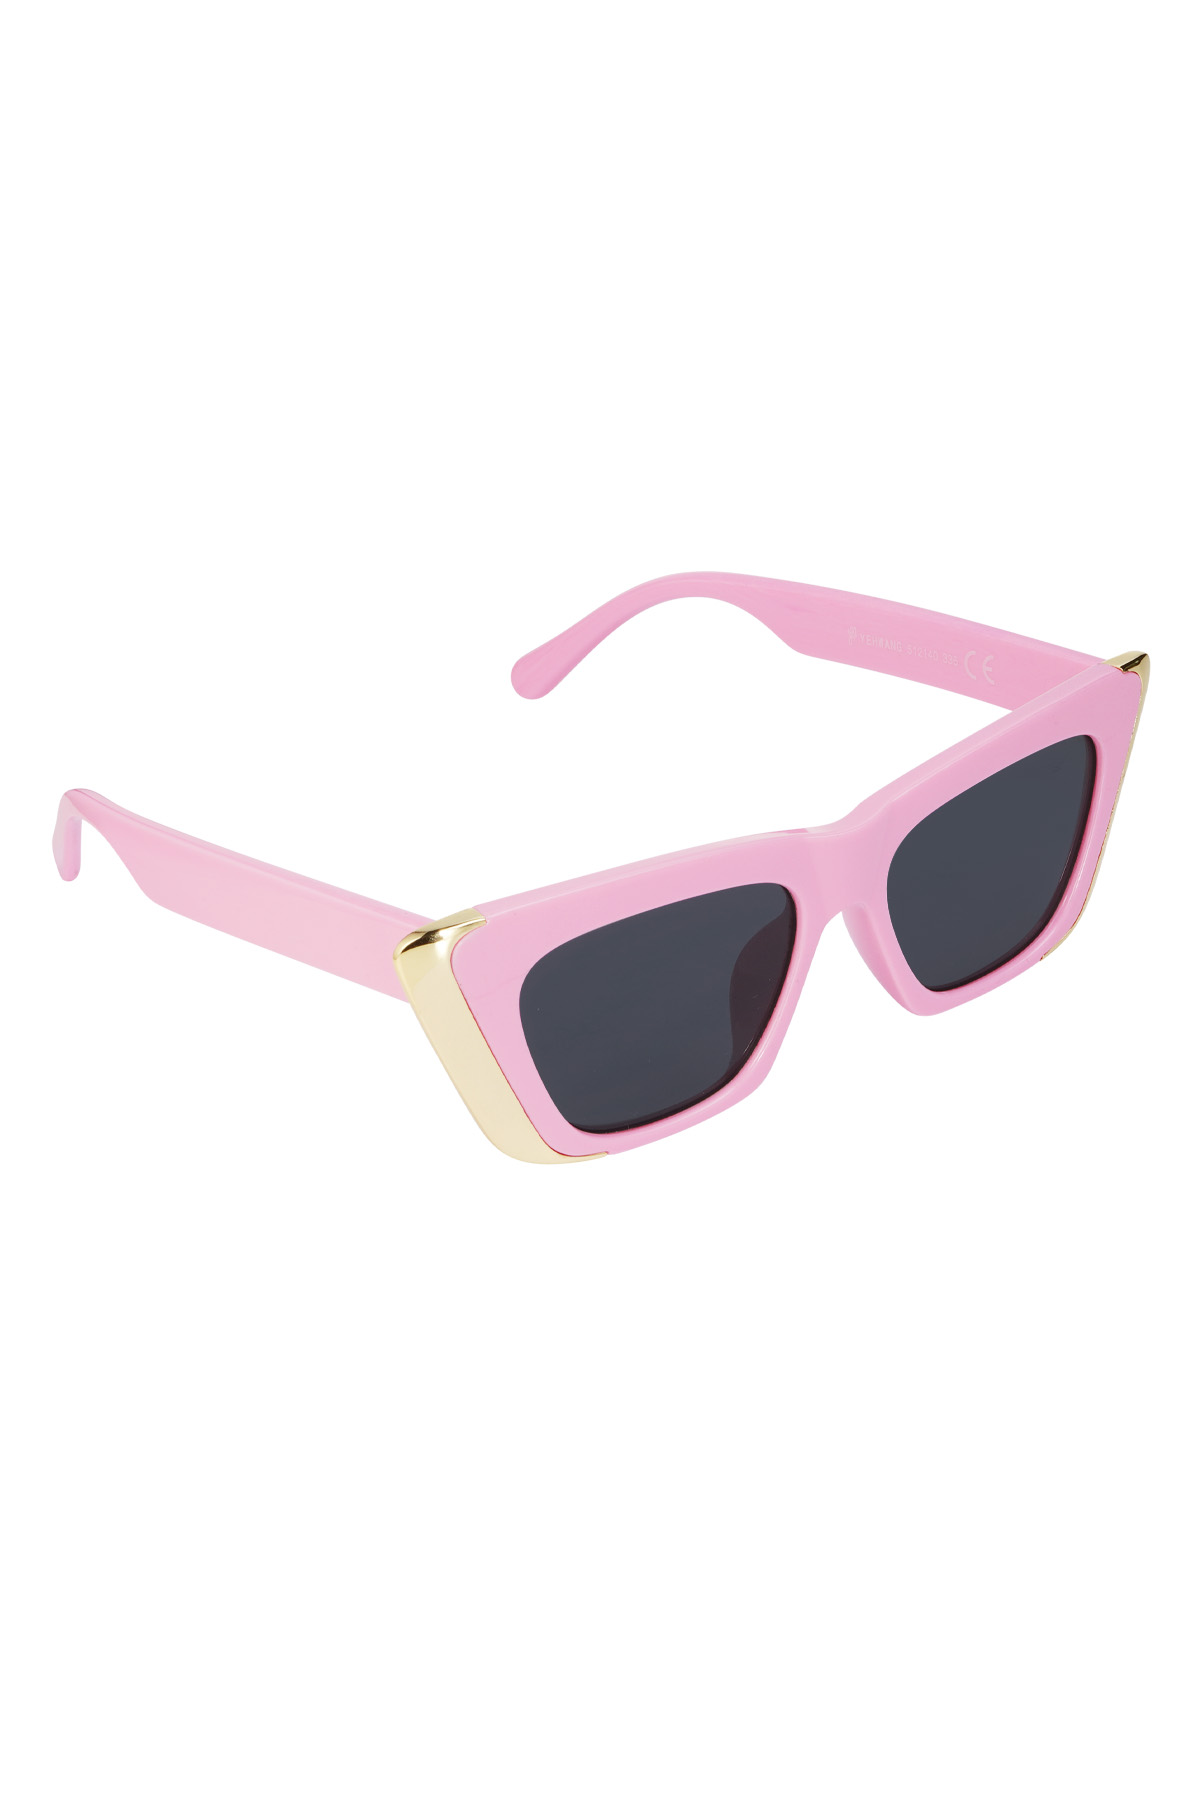 Sunglasses sun savvy - pink gold